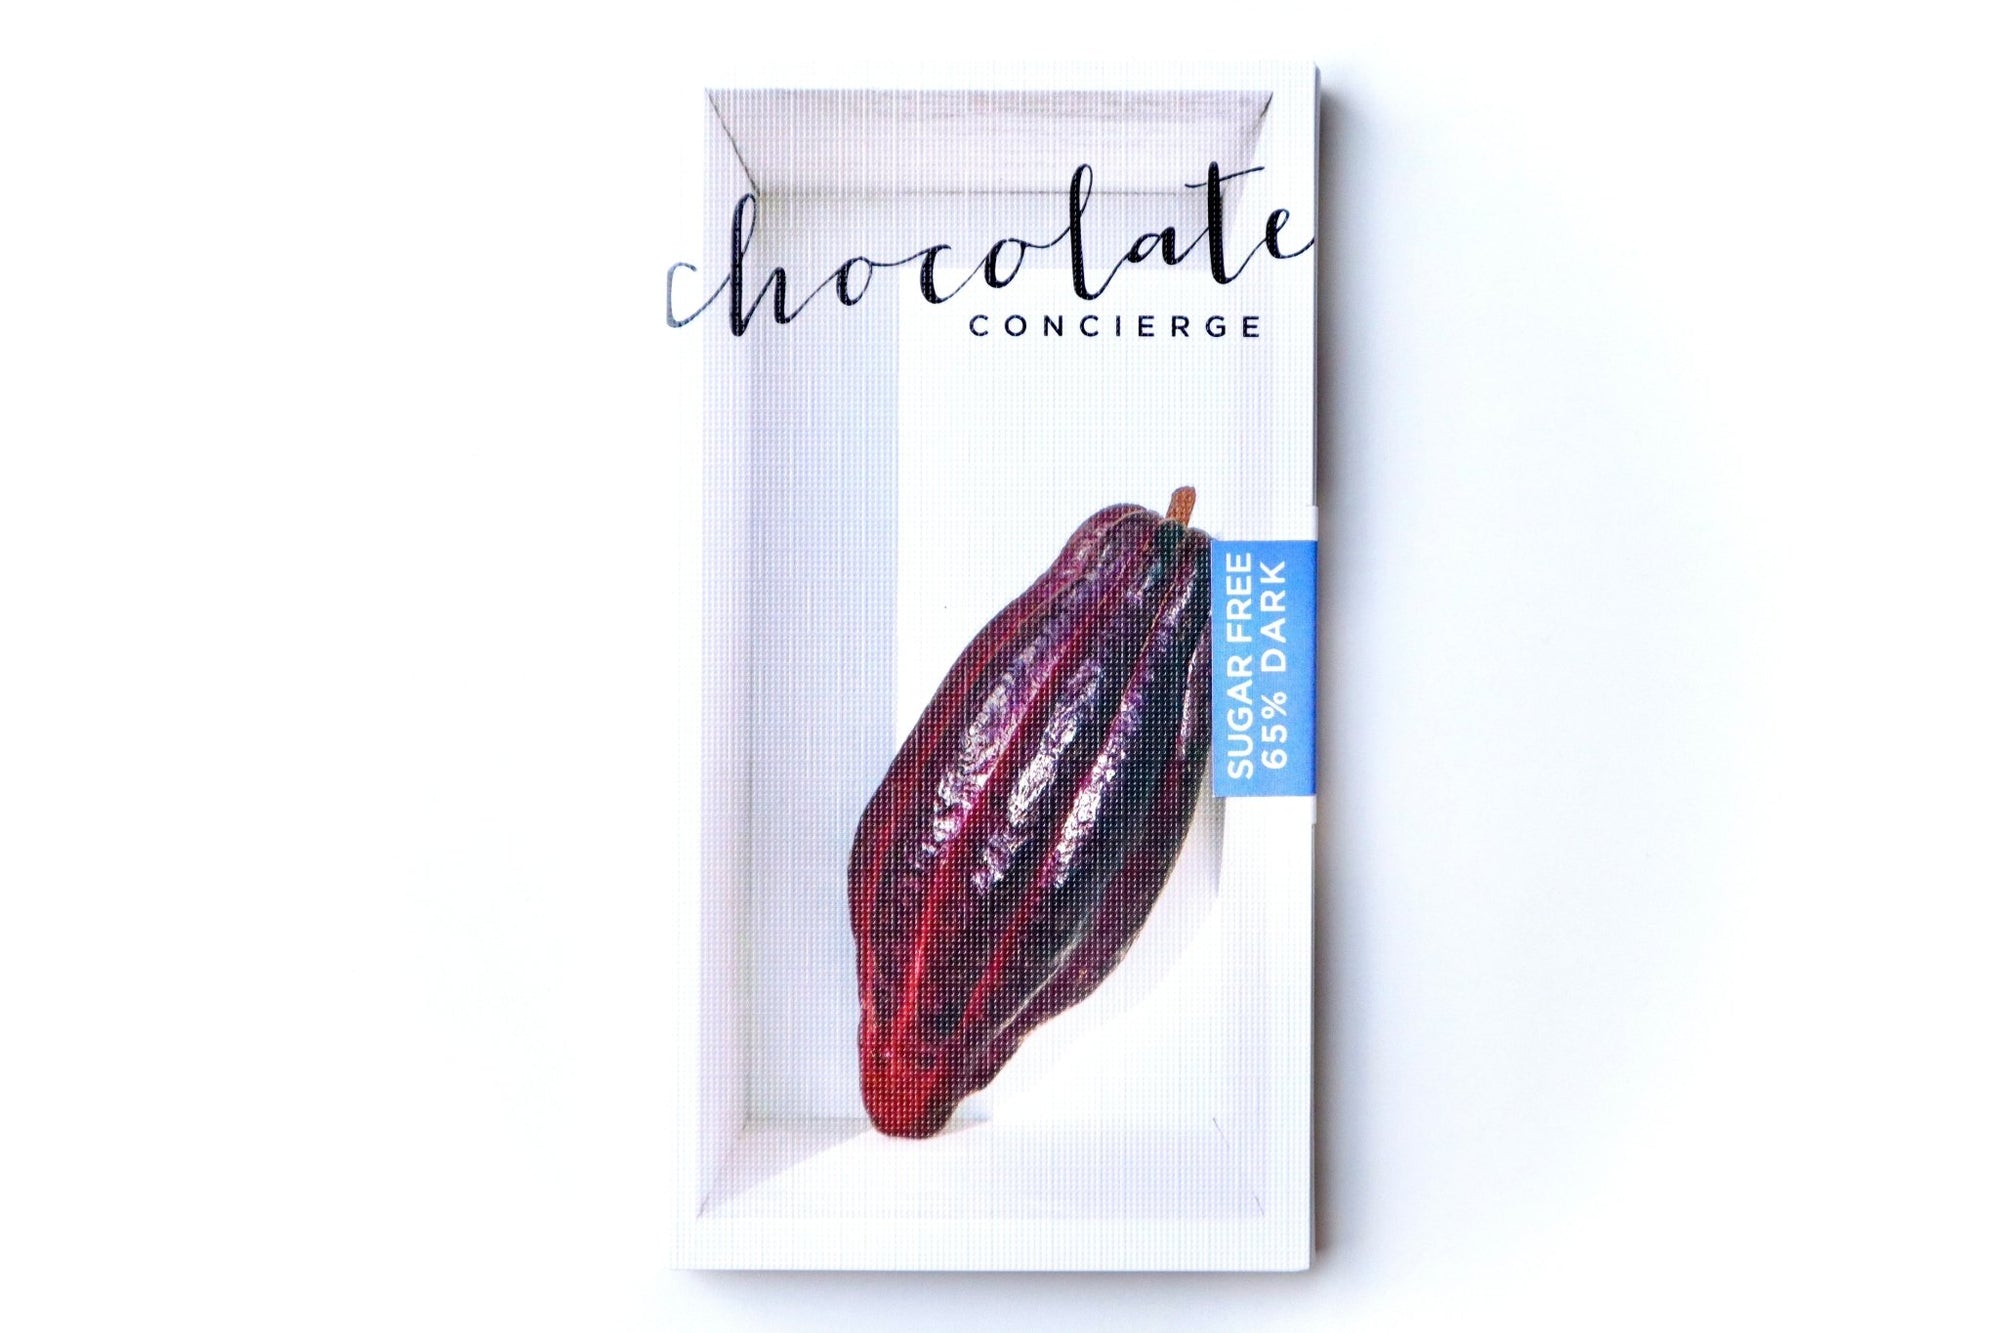 Malaysia Perak Chemor - 65% Sugar Free Dark Chocolate - Bean Shipper